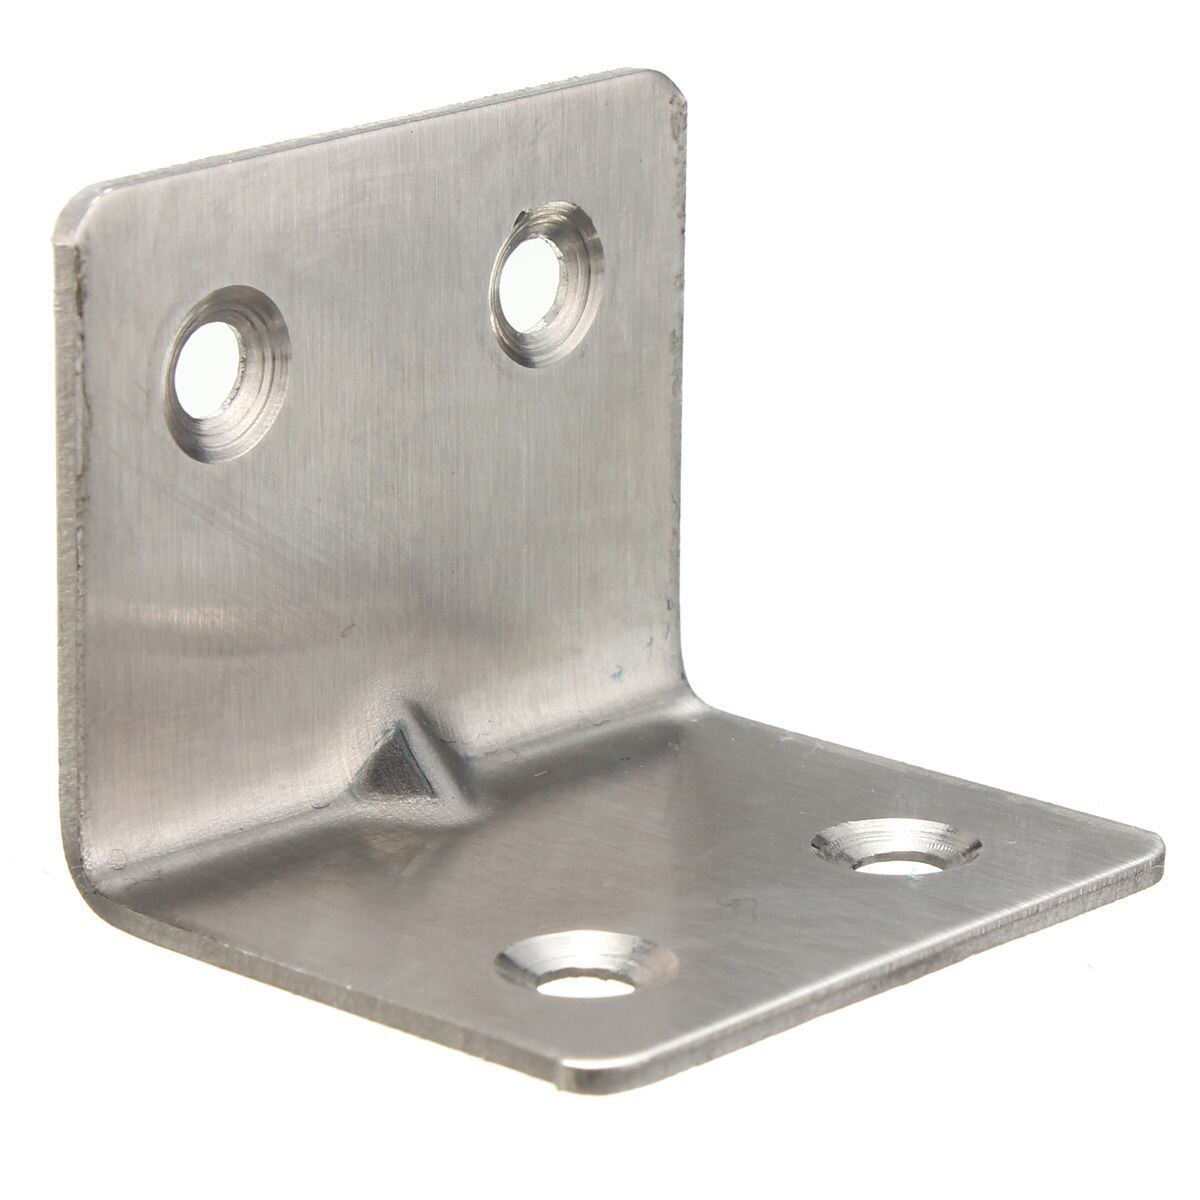 30mm x 30mm θ ֹ  ڳ 귡Ŷ ÷Ʈ  : 5 /30mm x 30mm Stainless Steel Kitchen Right Angle Corner Bracket Plate packs:5Pcs